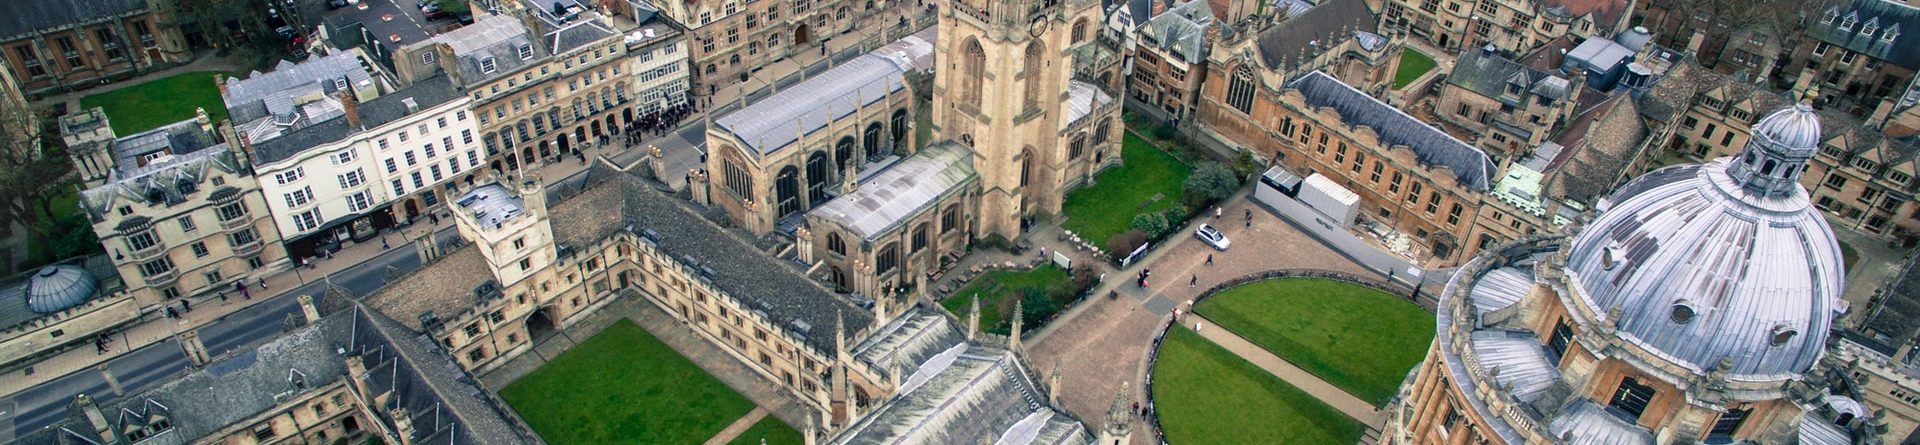 4 UK universities ranked among the best